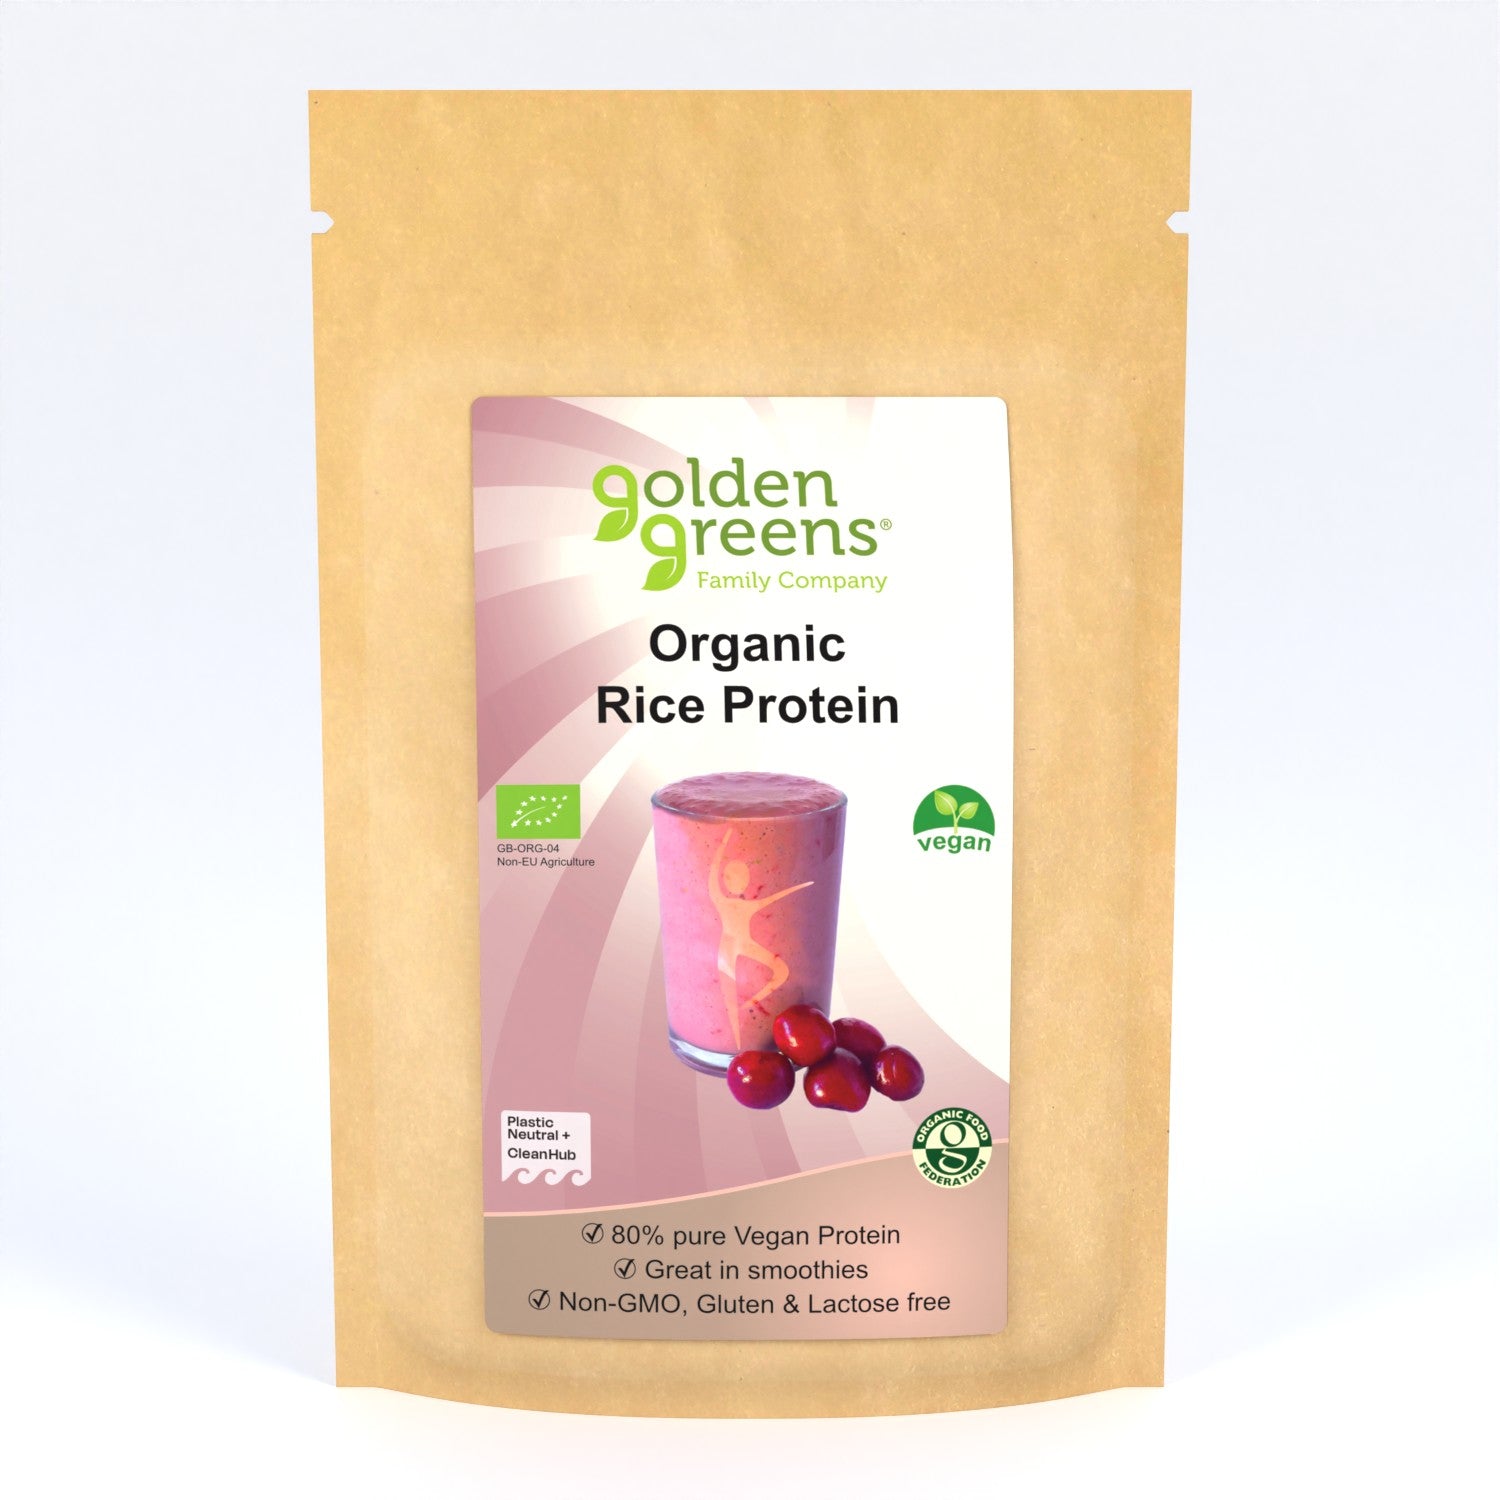 View Organic Rice Protein Powder information